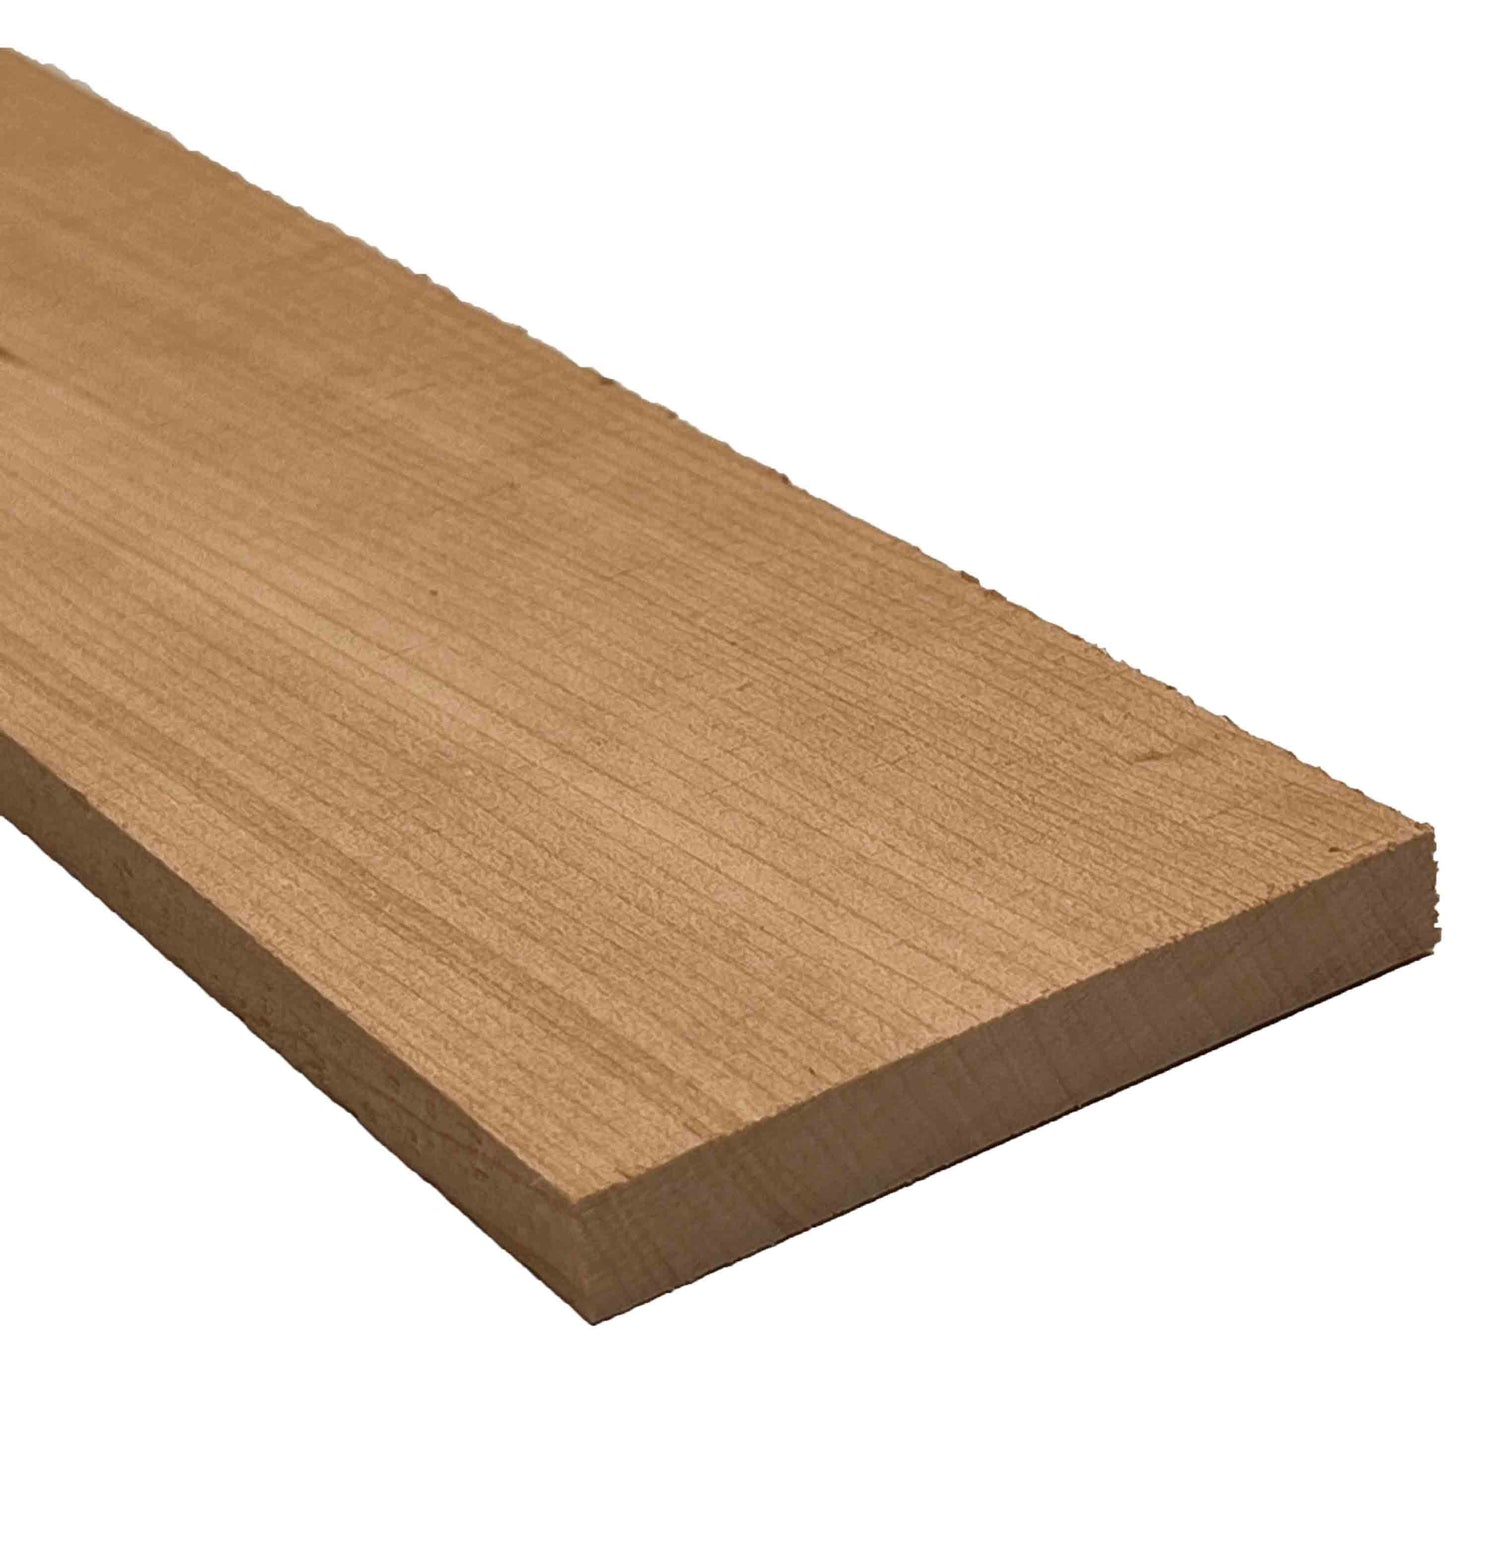 Cherry Hardwood - Cherry Wood and Thin Boards